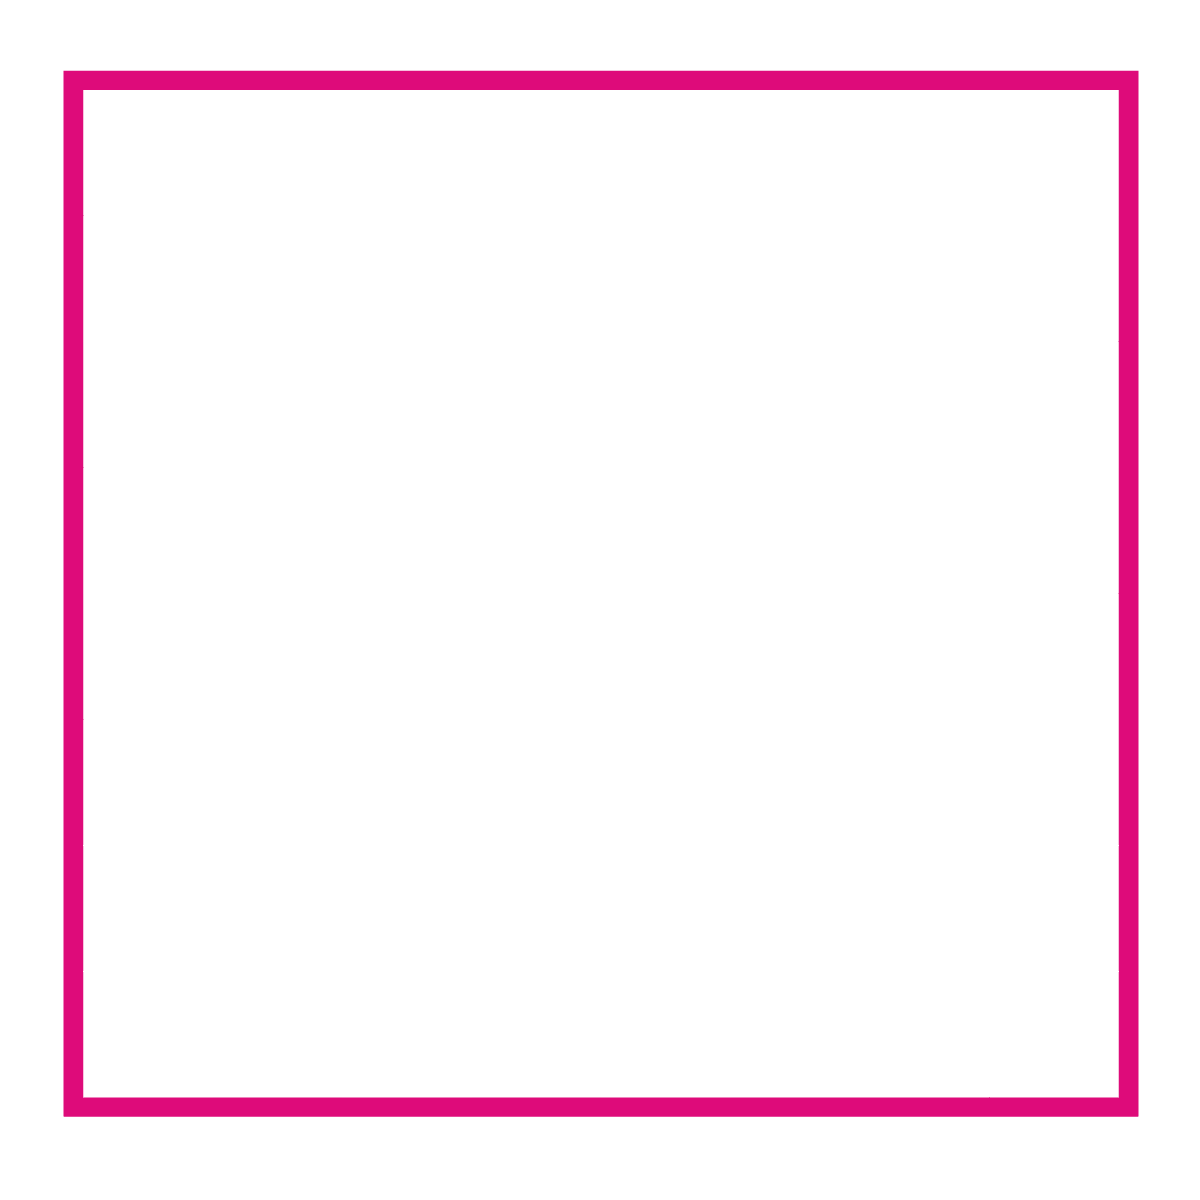 Playground Marking Chess Board